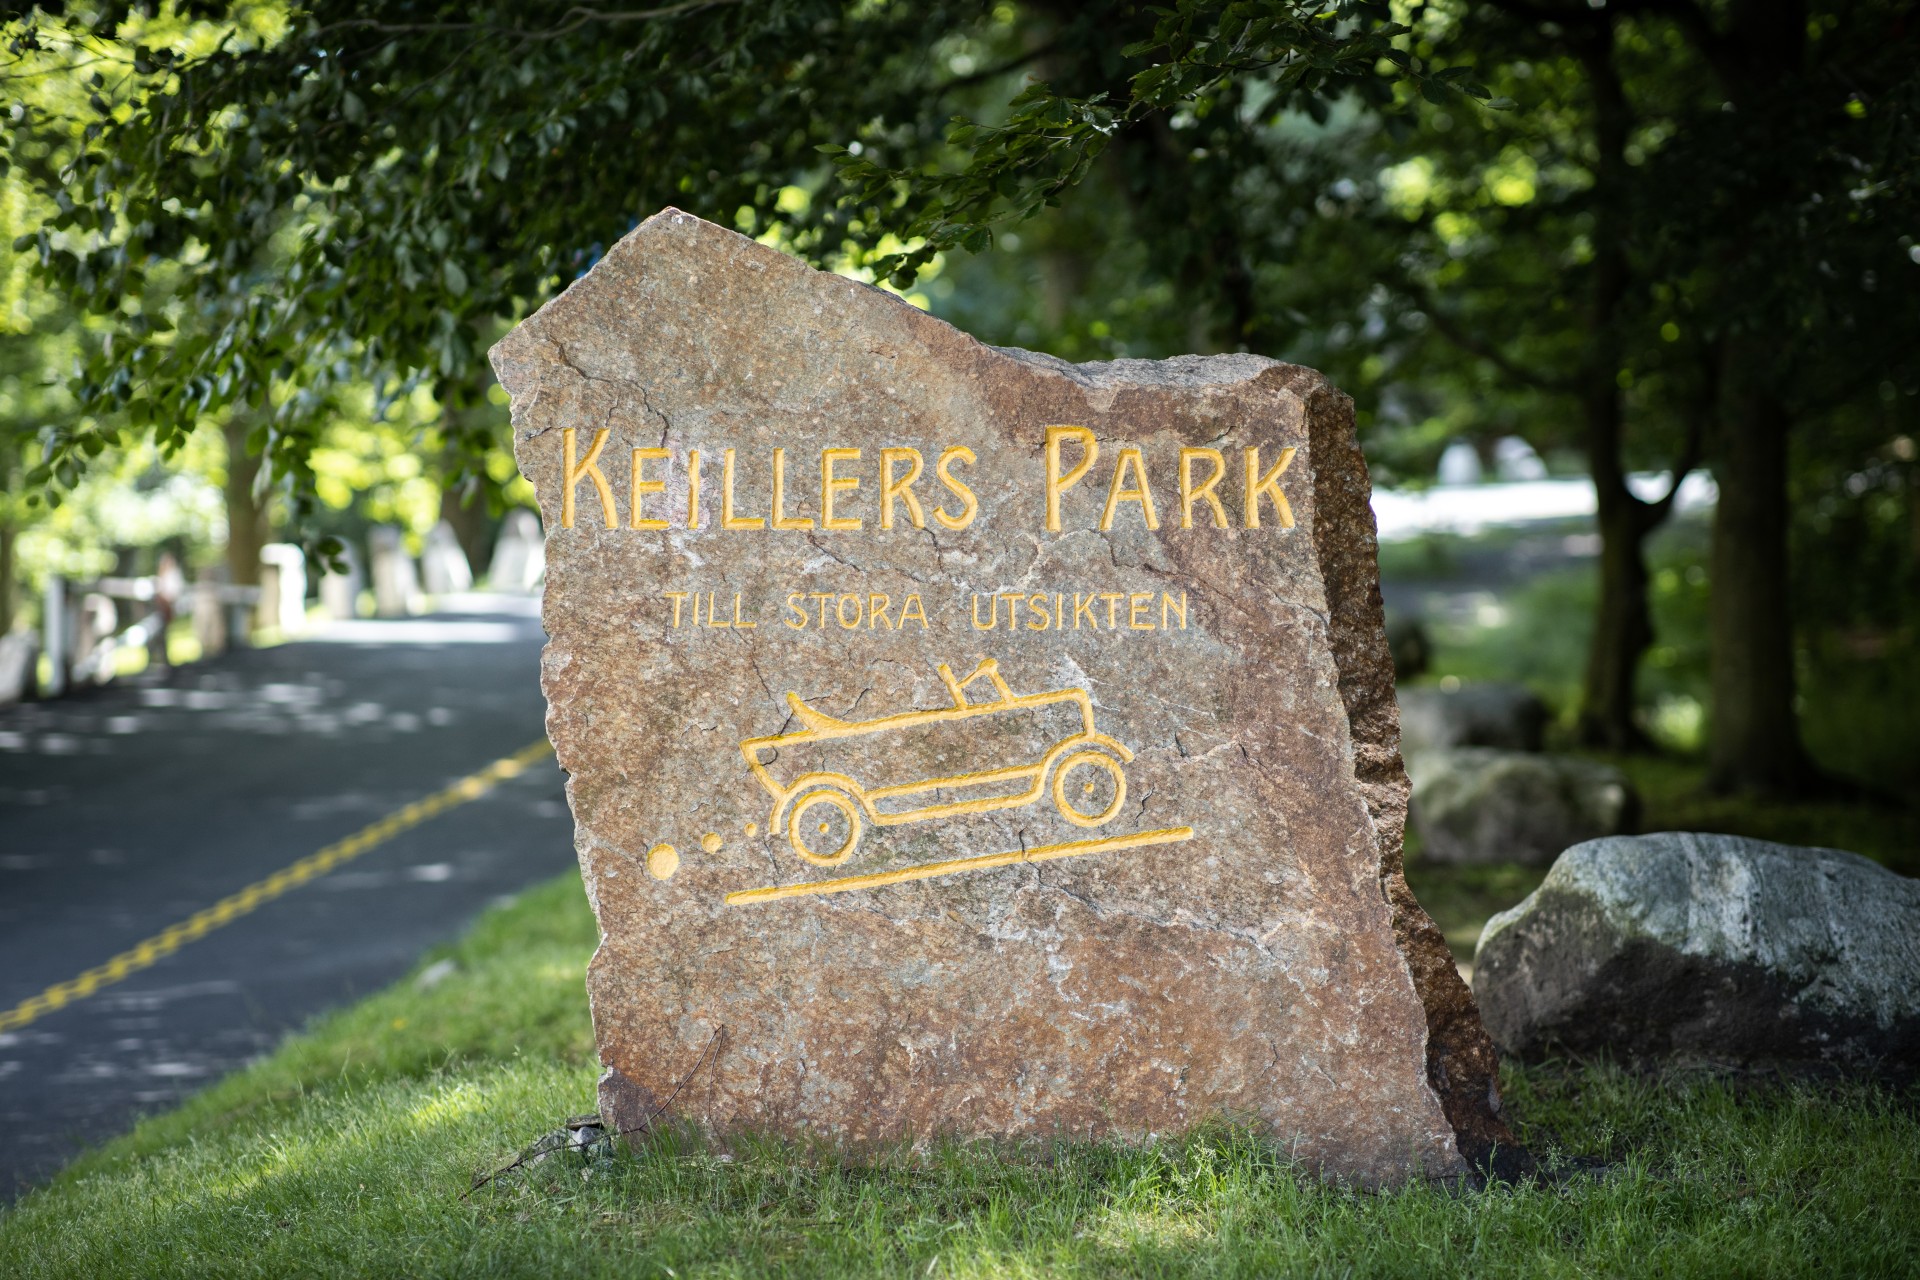 Keillers park Jöns Rundbäcks Plats 1-24